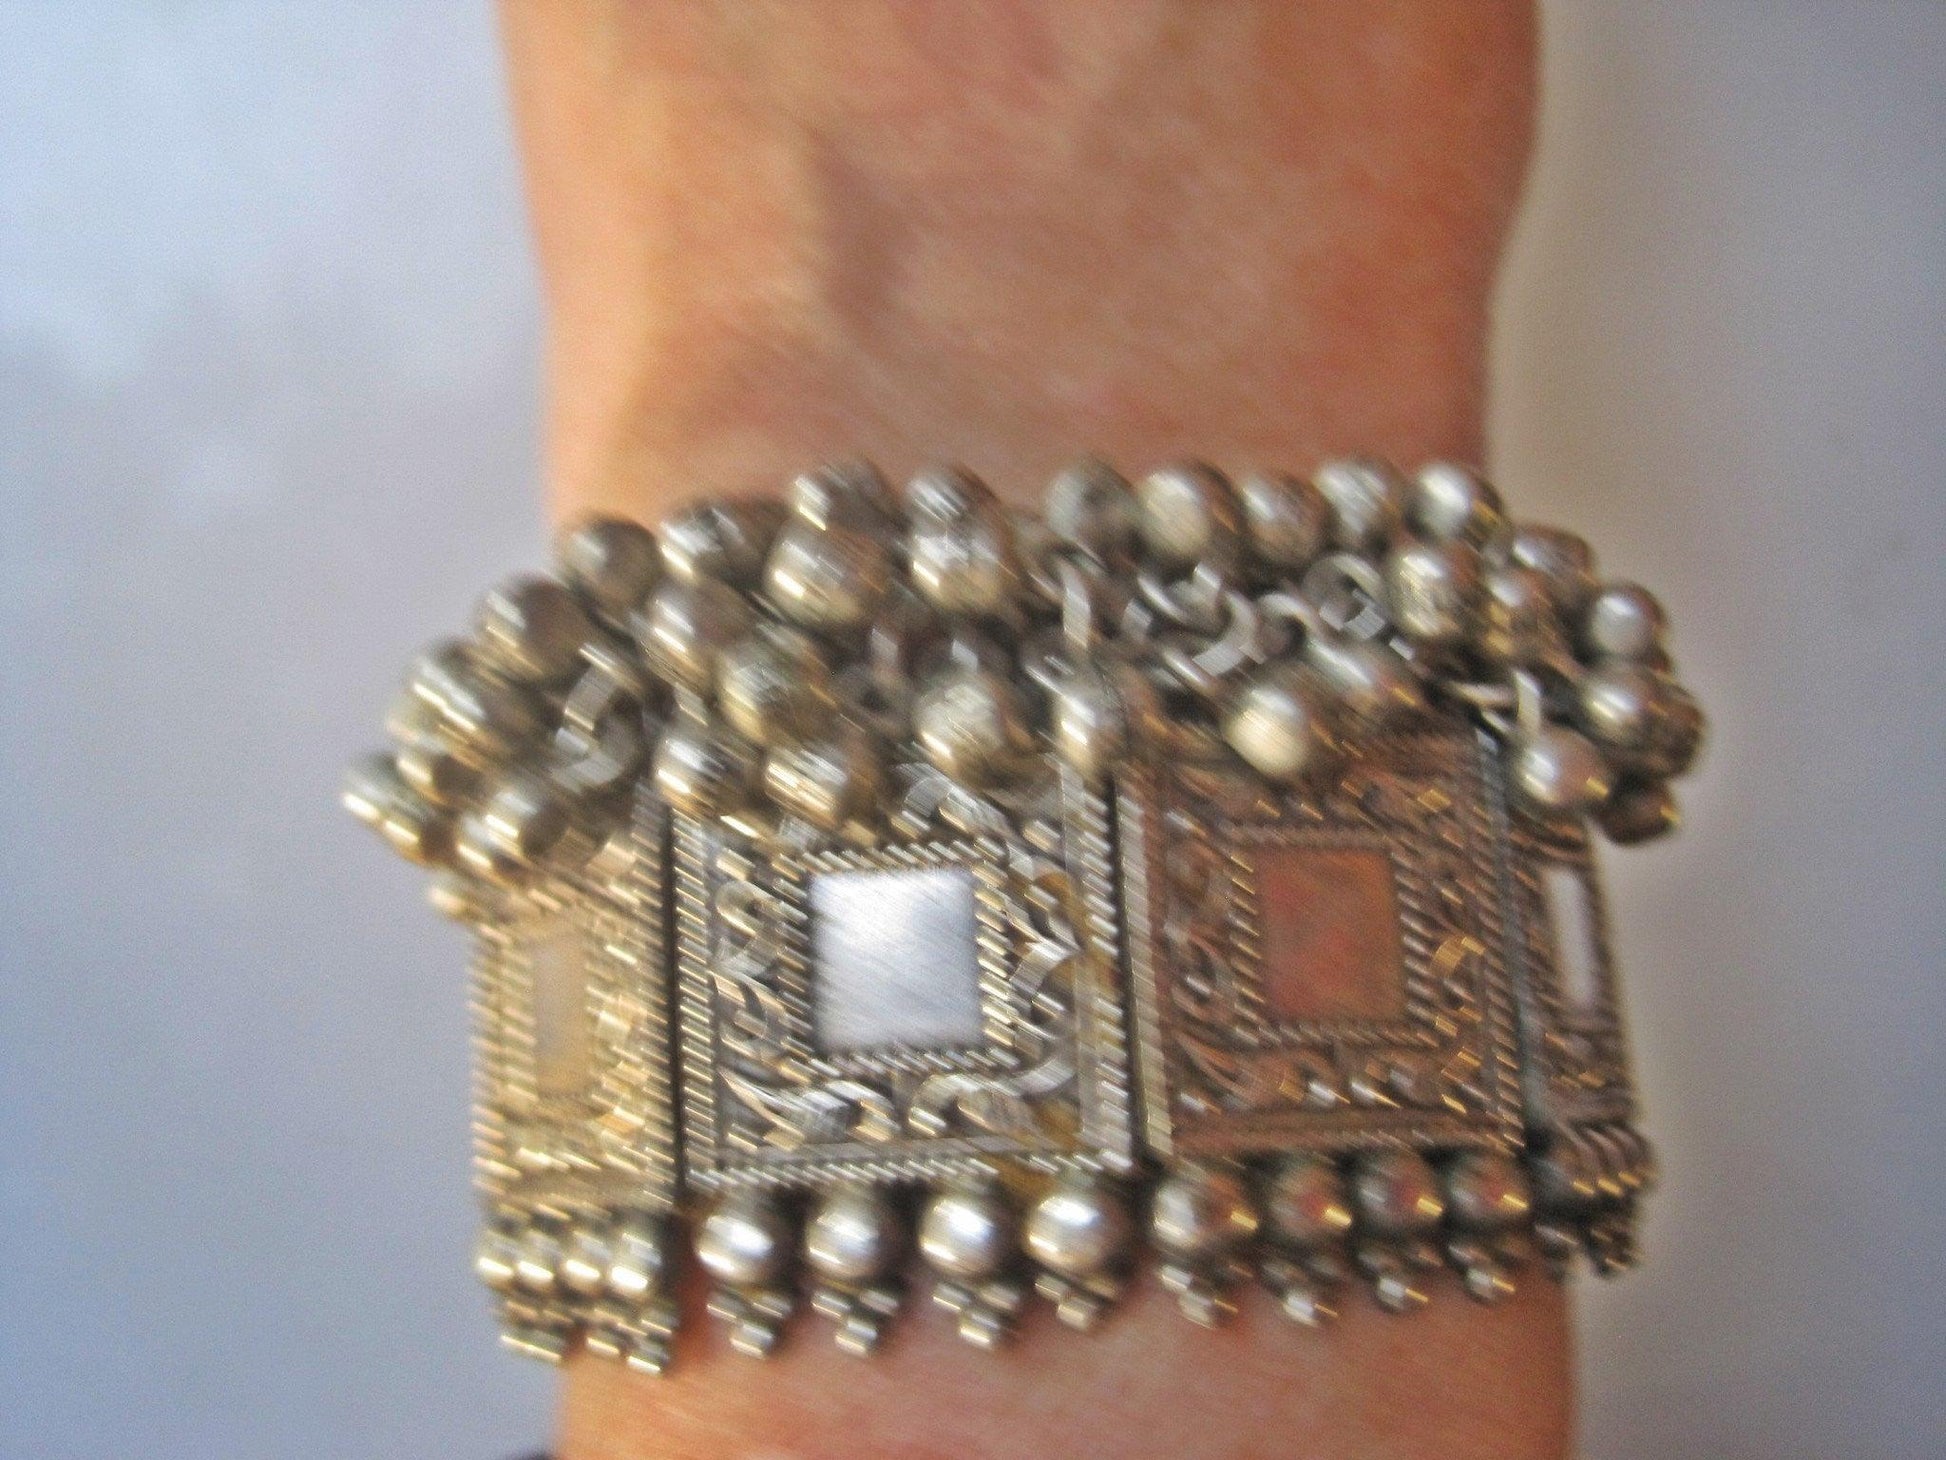 Vintage Silver Arm Indian Bracelet or Bazuband from Rajsathan - Anteeka